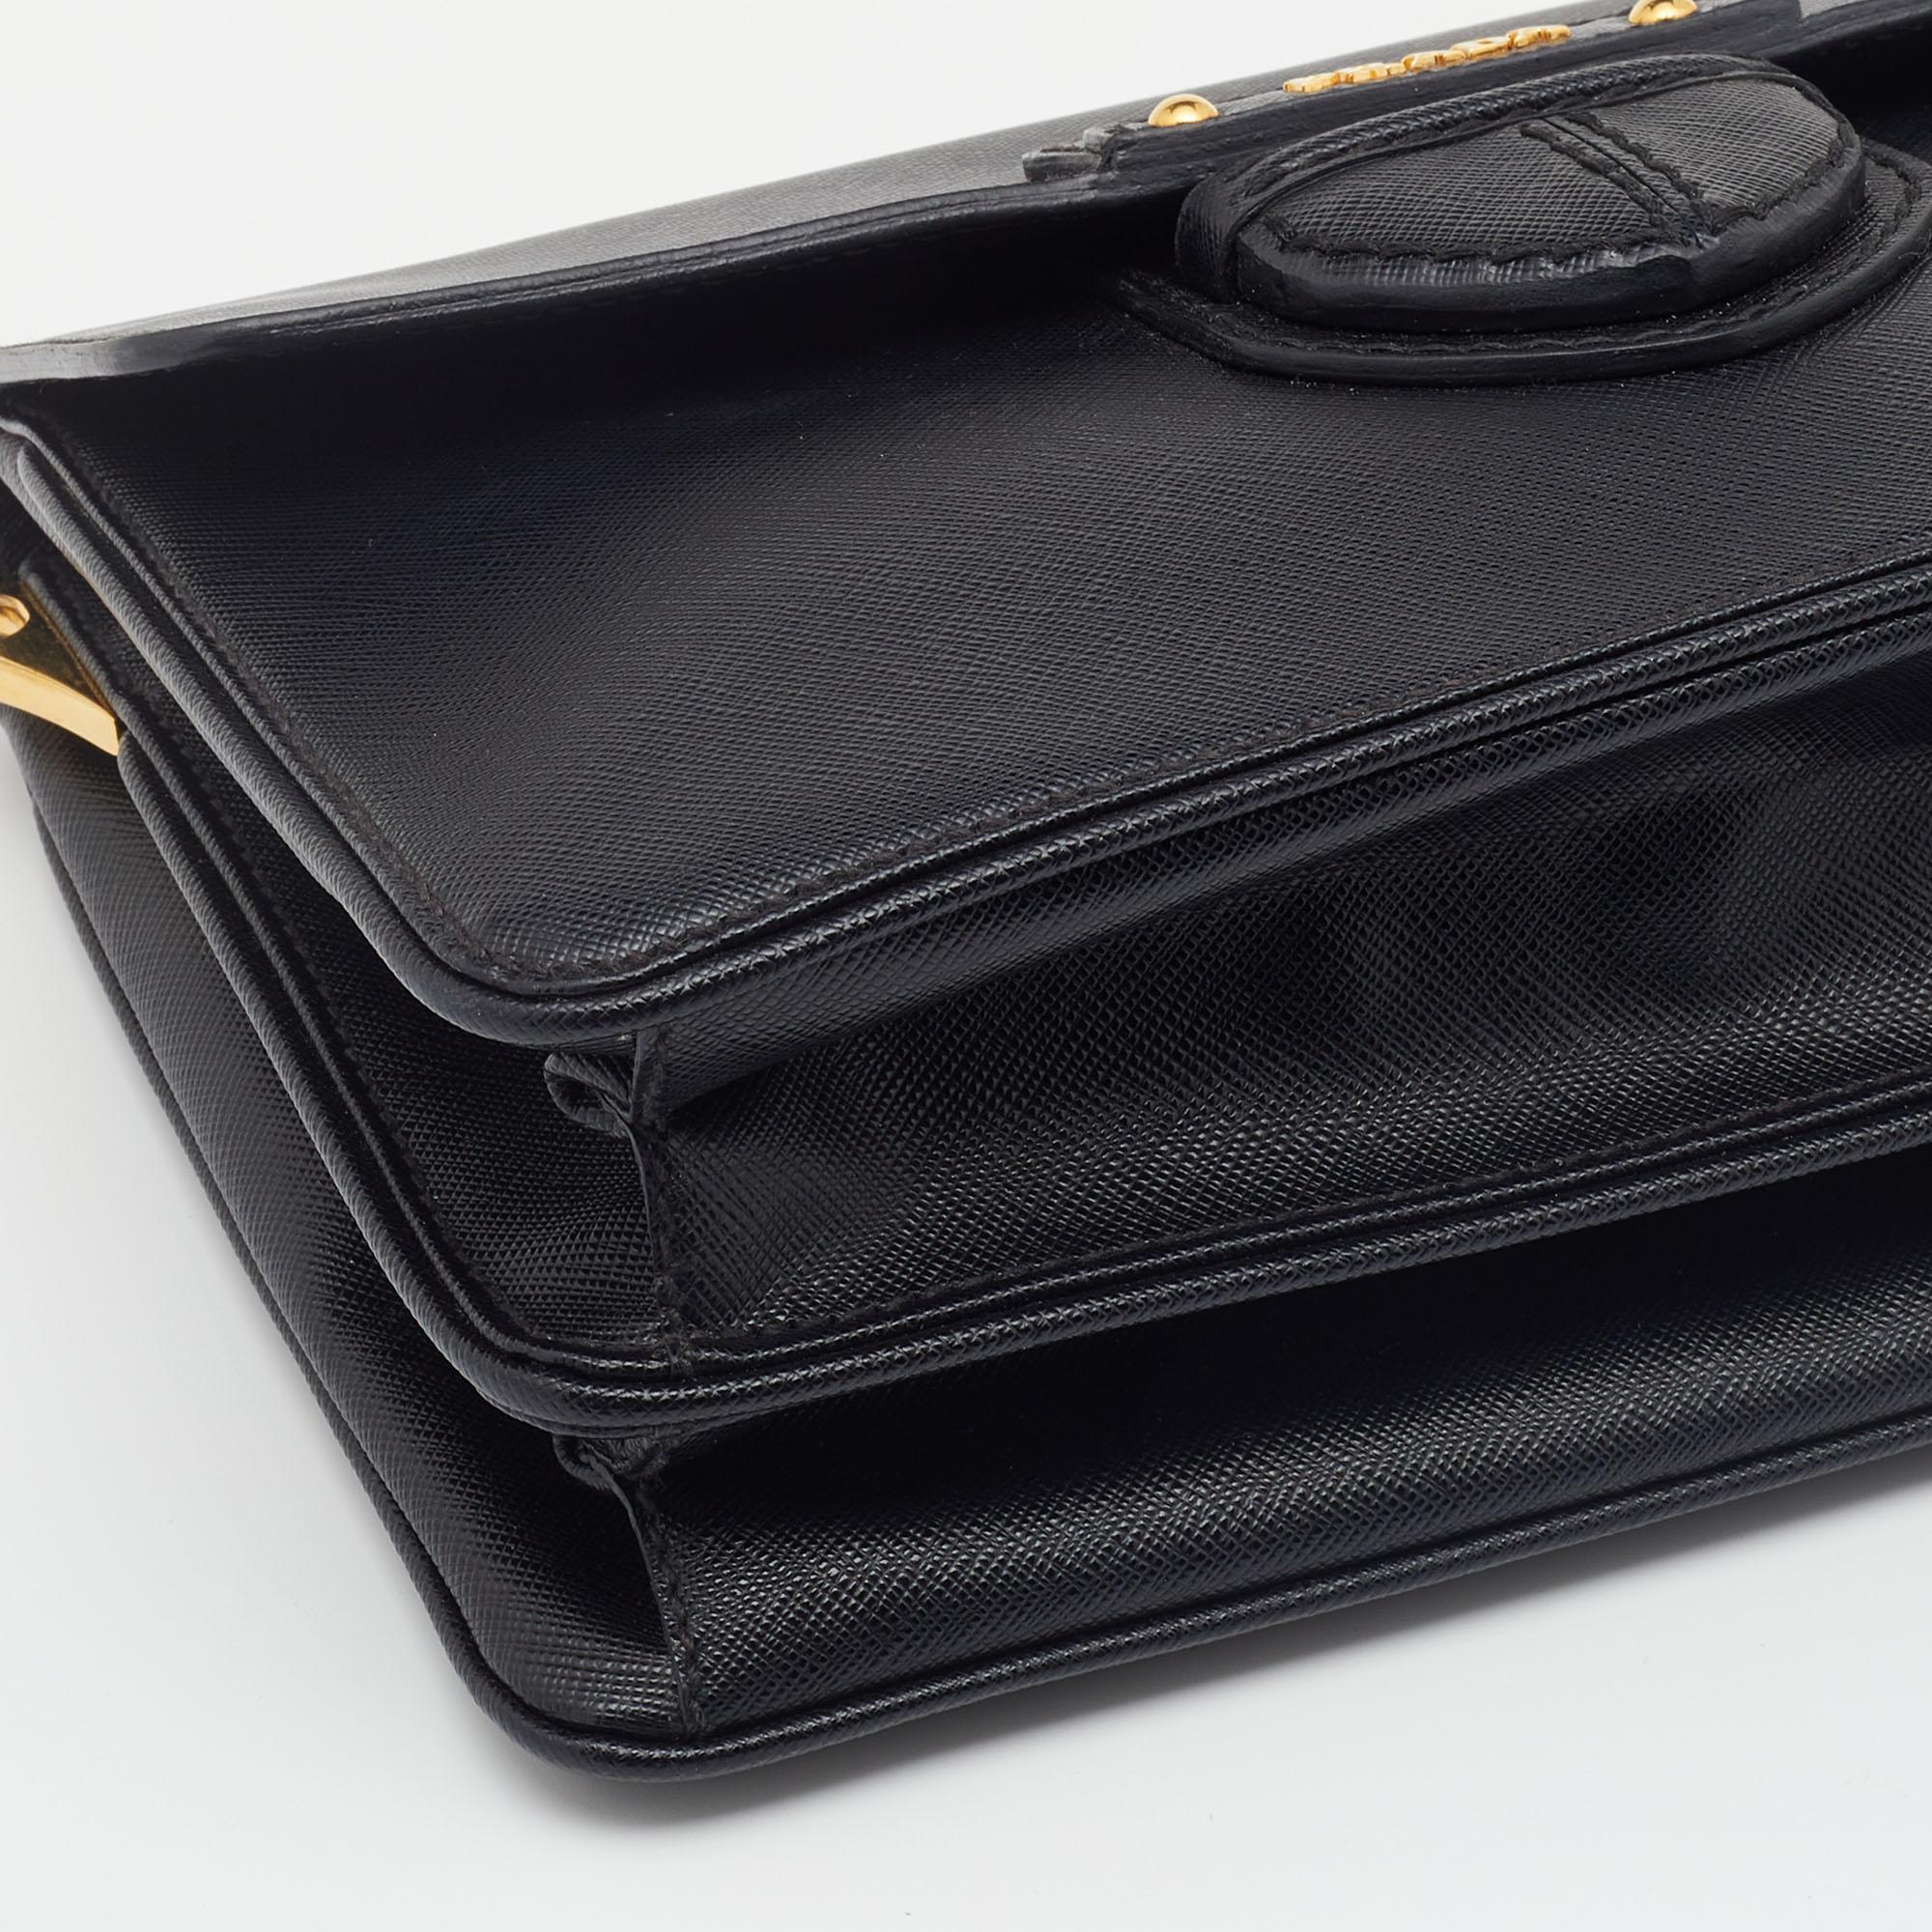 Prada Black Saffiano Leather Cinghiale Flap Crossbody Bag 3